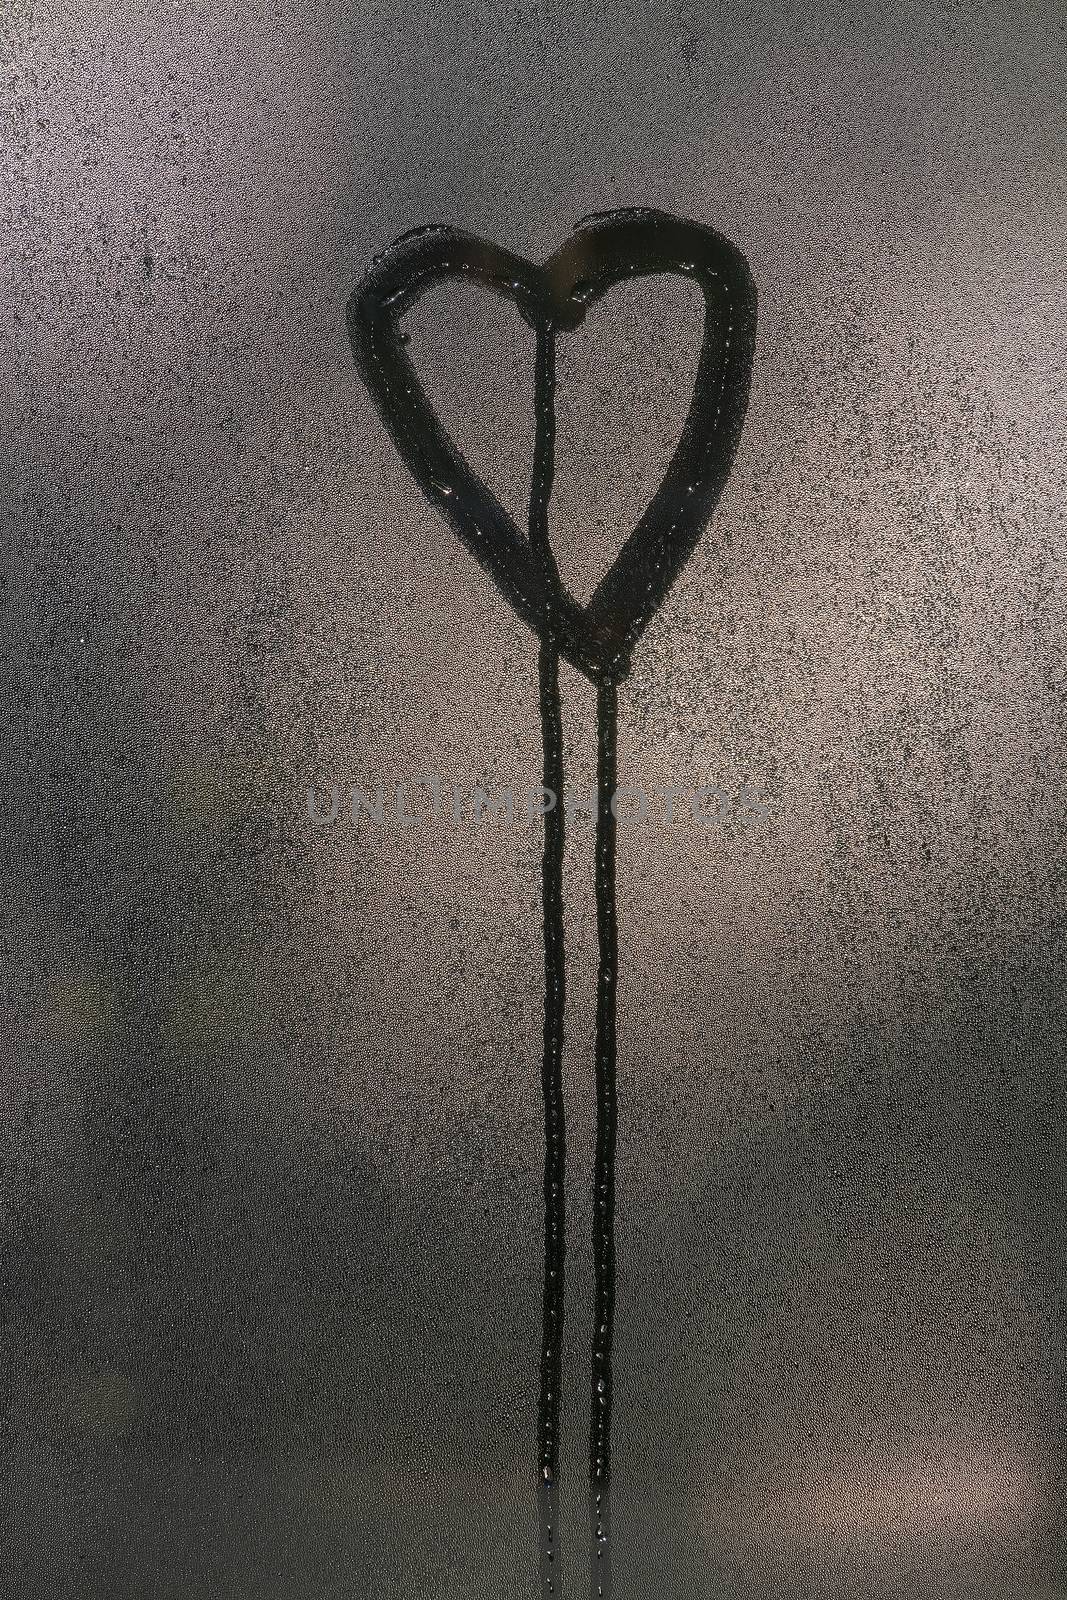 Window dew and drawn heart  by ArtesiaWells